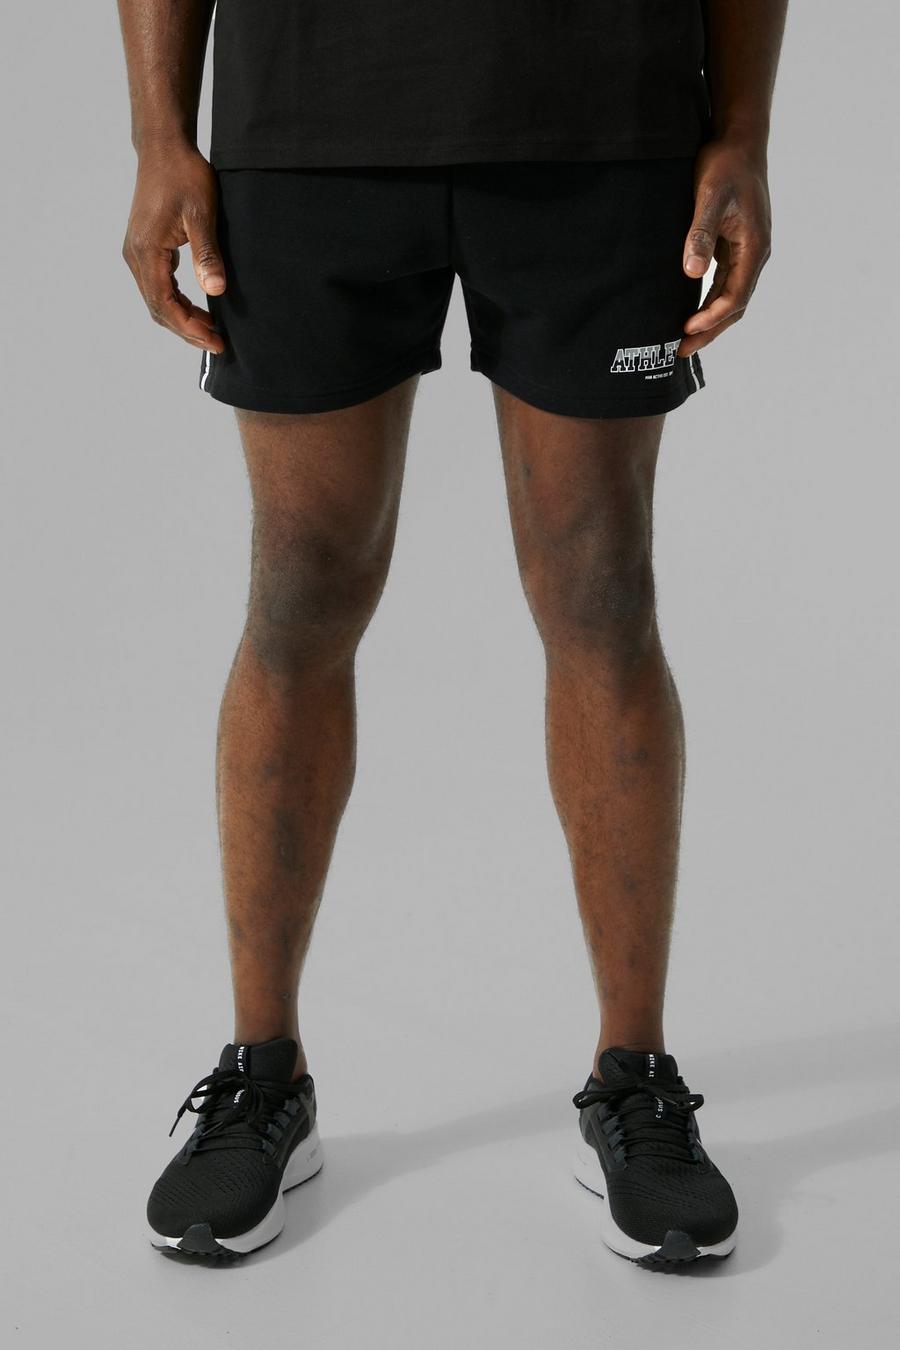 Pantaloncini corti Man Active Athletic, Black negro